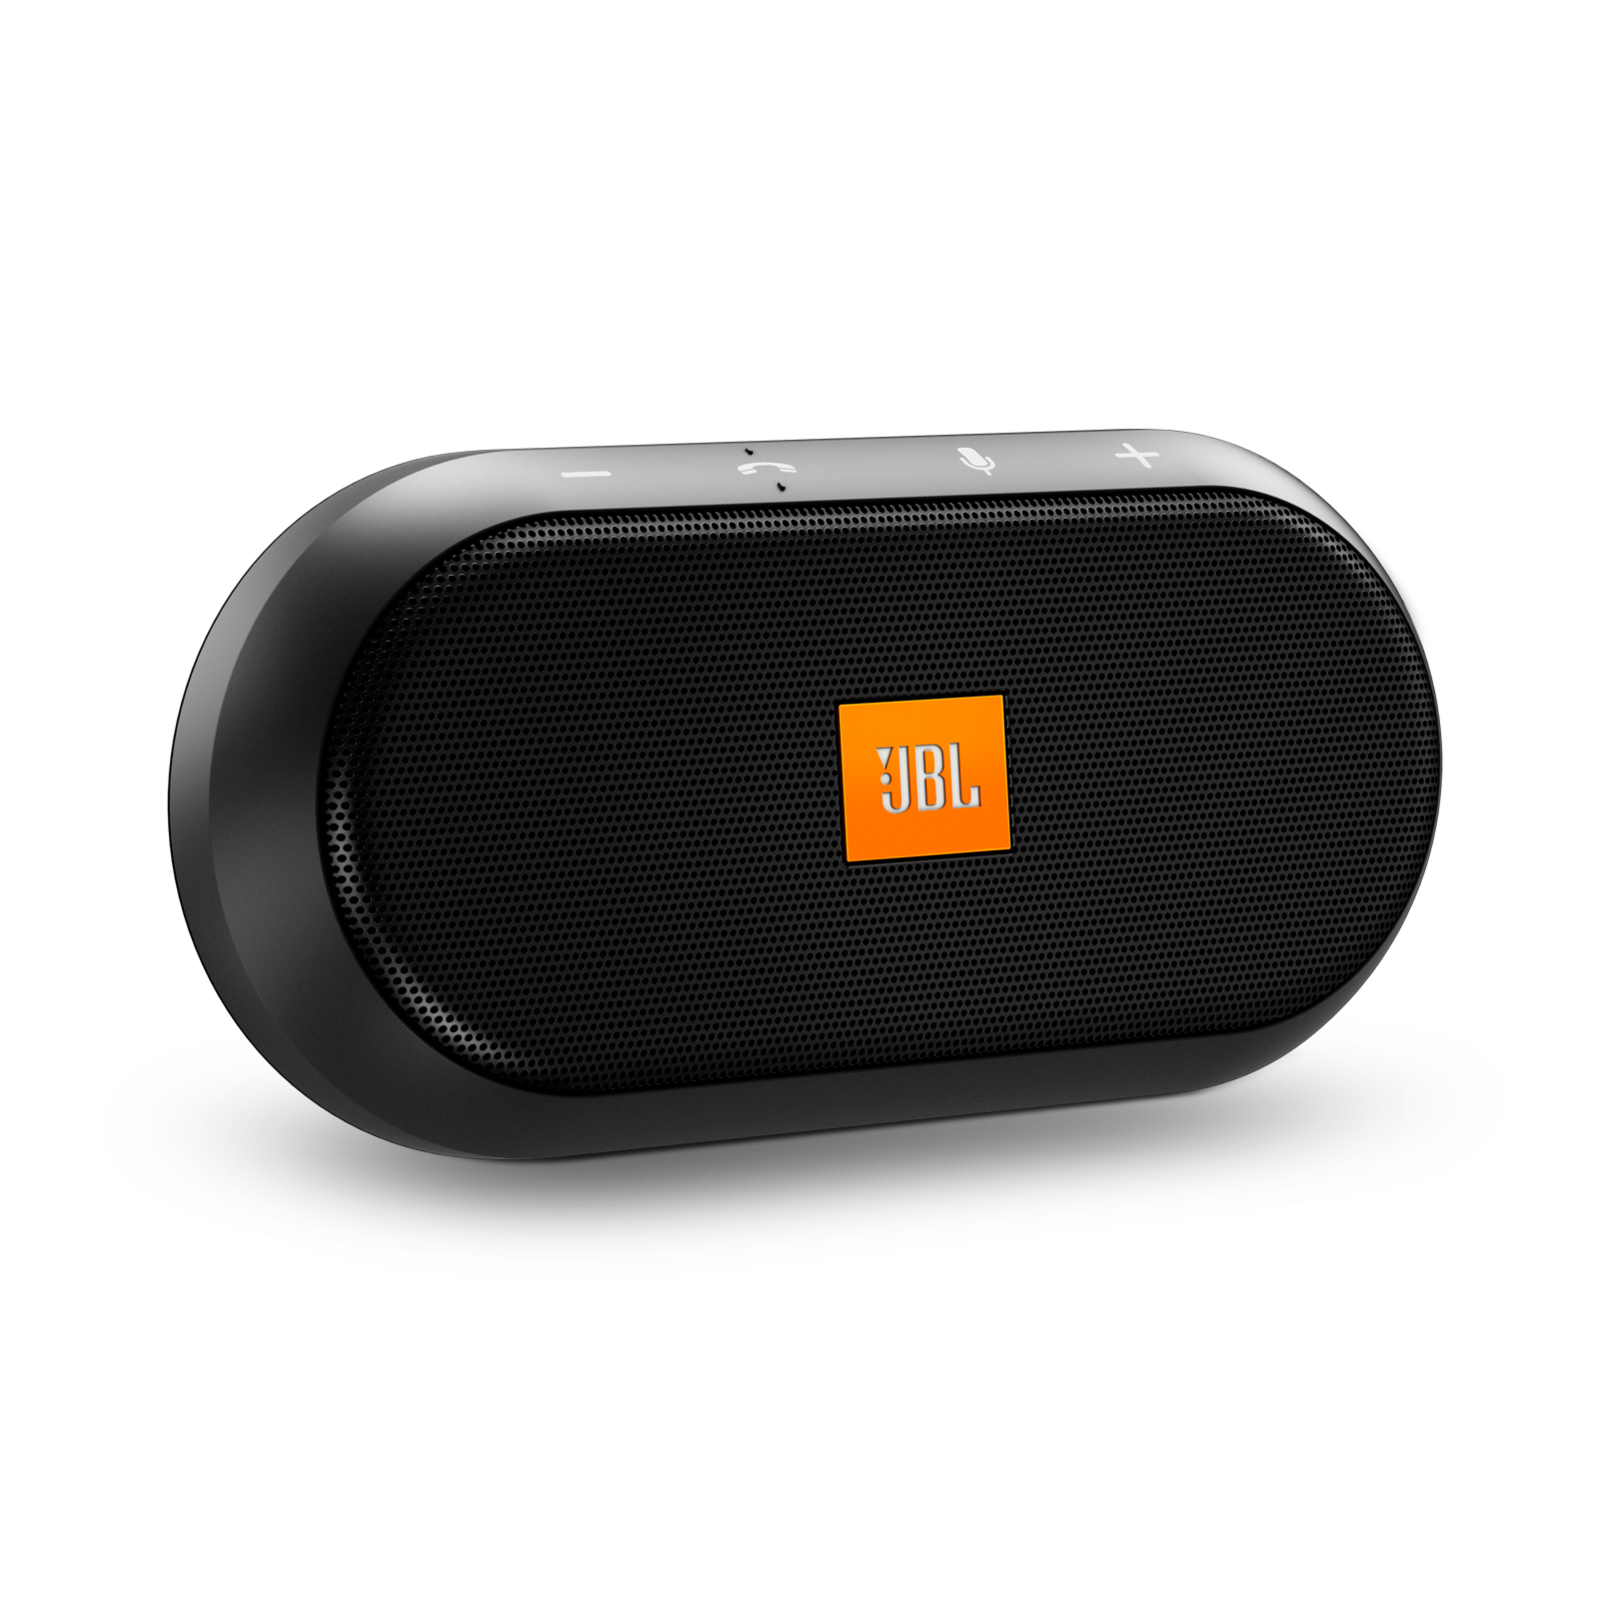 JBL Trip - Black - Visor Mount Portable Bluetooth Hands-free Kit - Hero